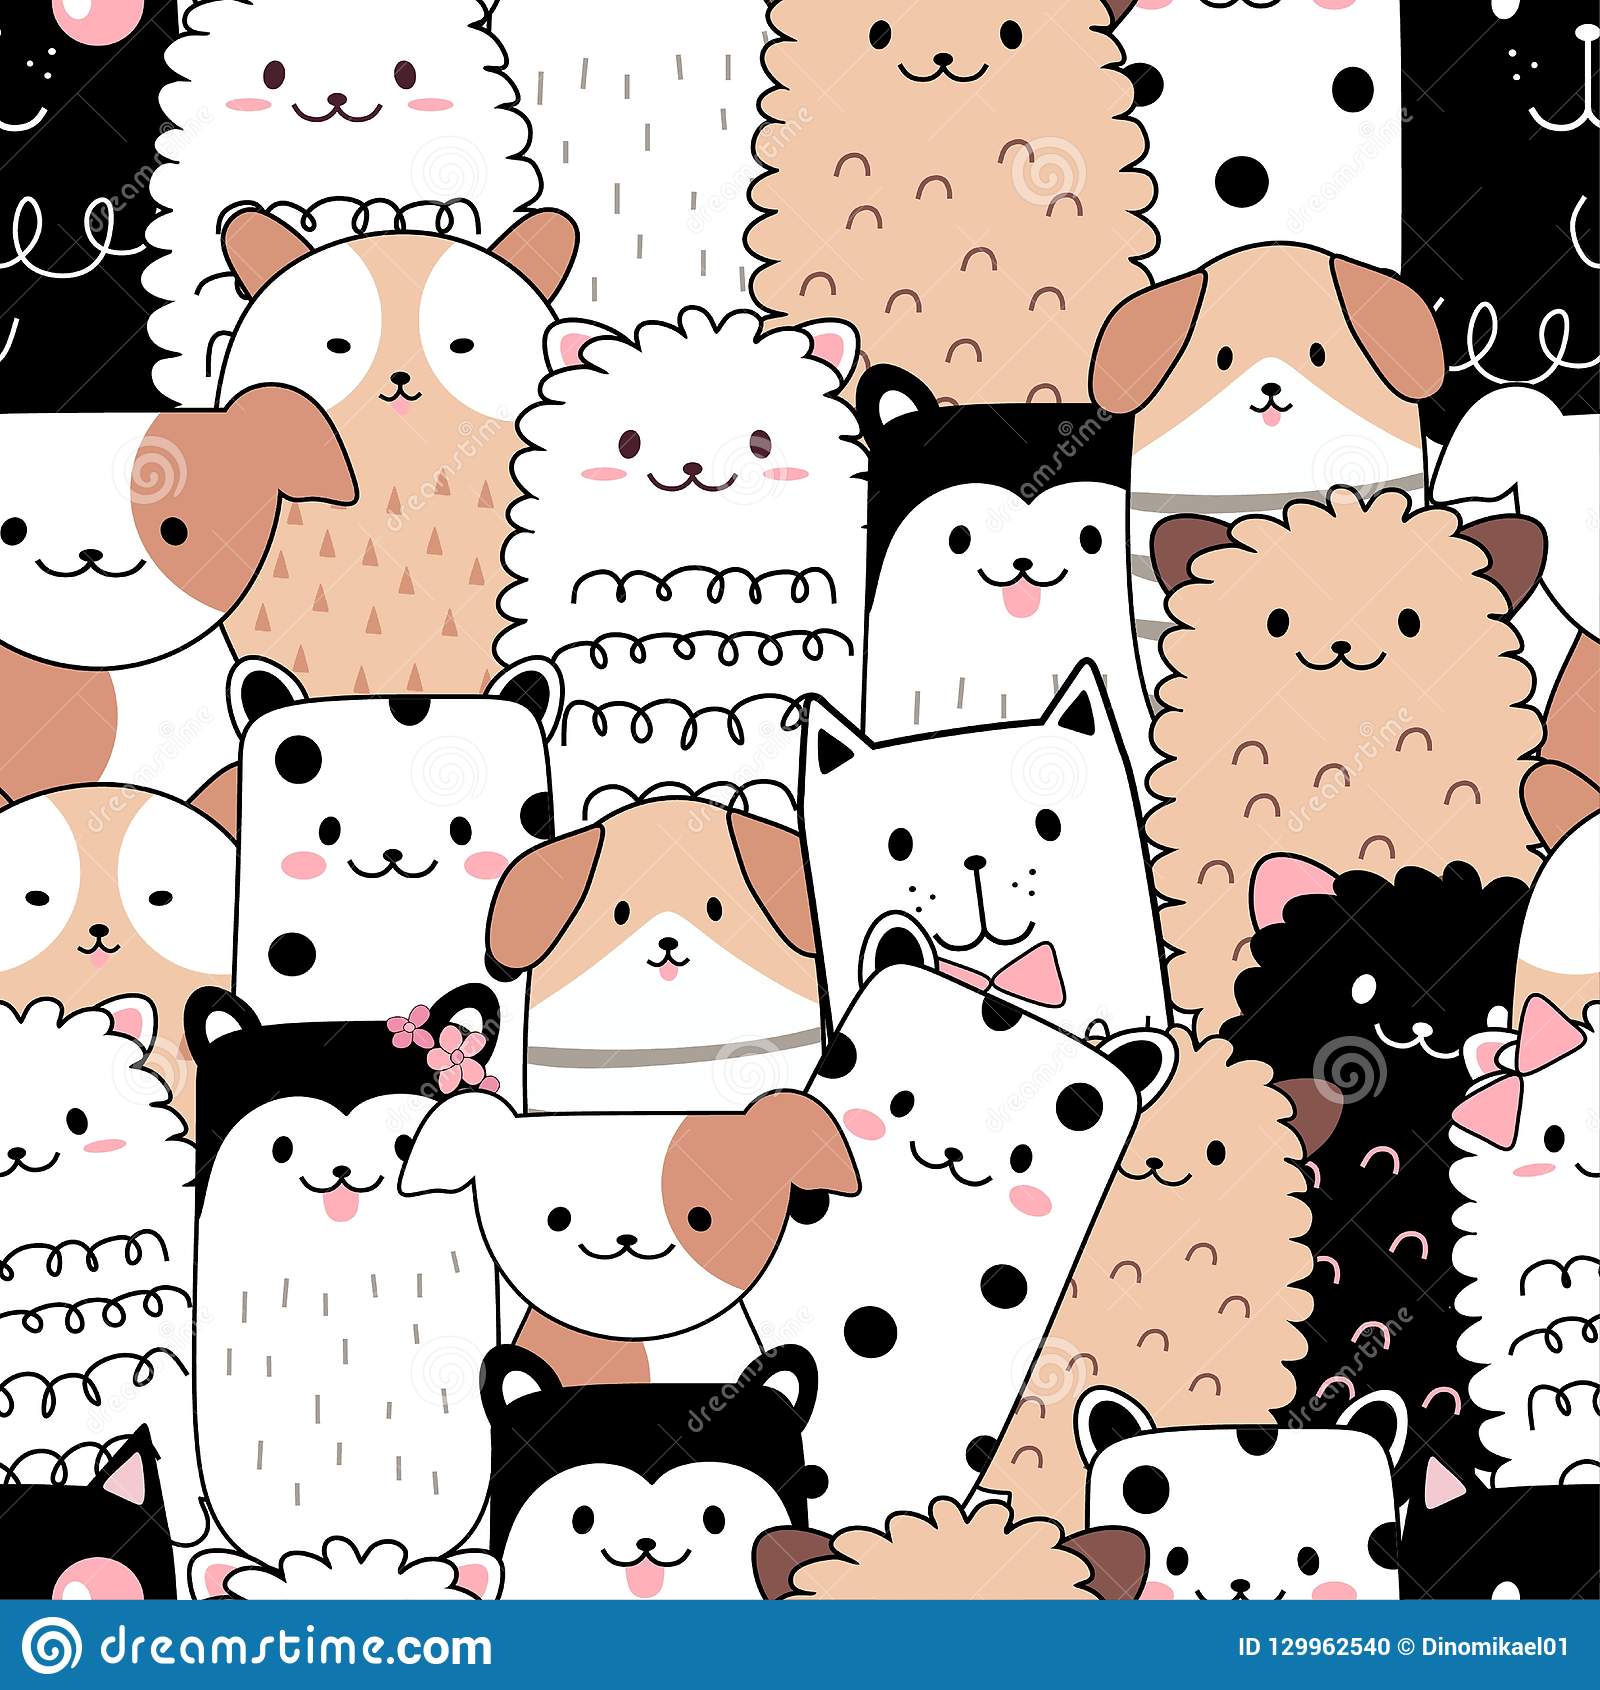 cute animal cartoon wallpapers for desktop